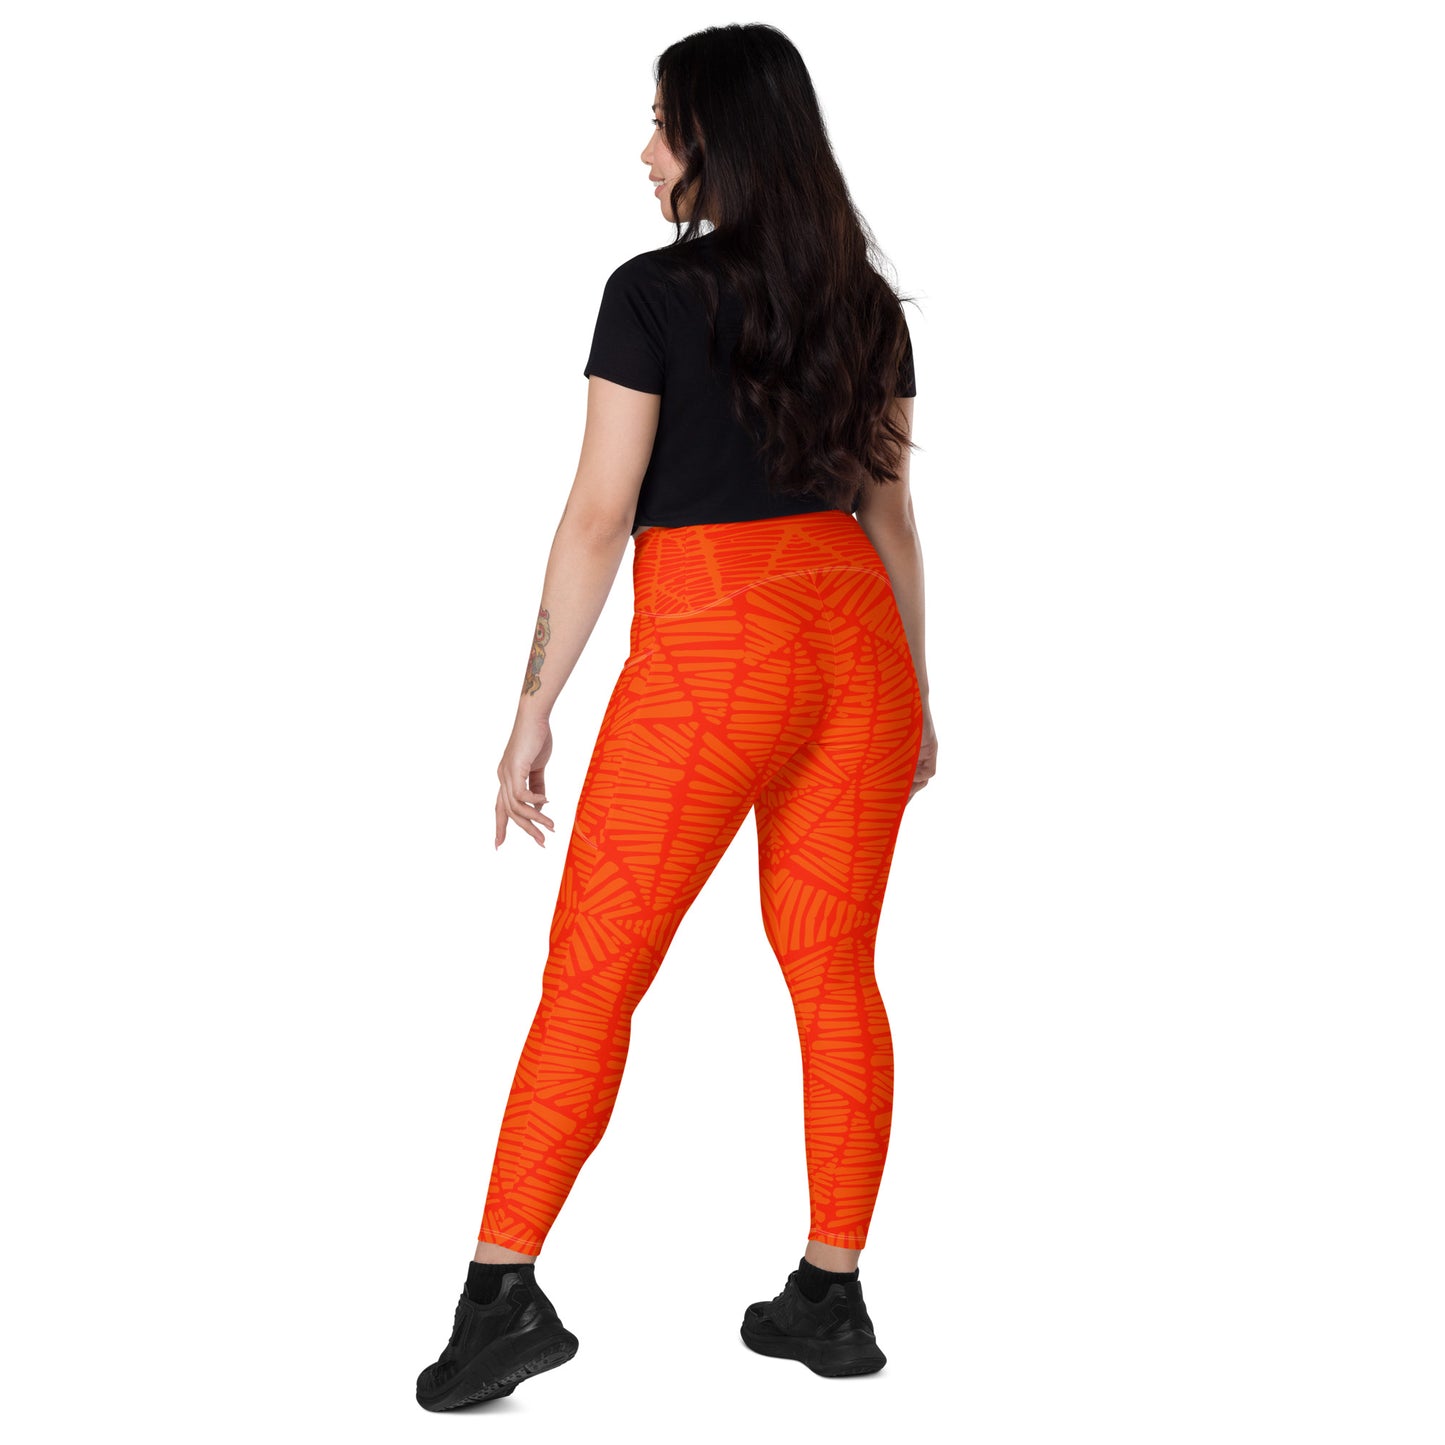 Blood Orange Leggings with Pockets